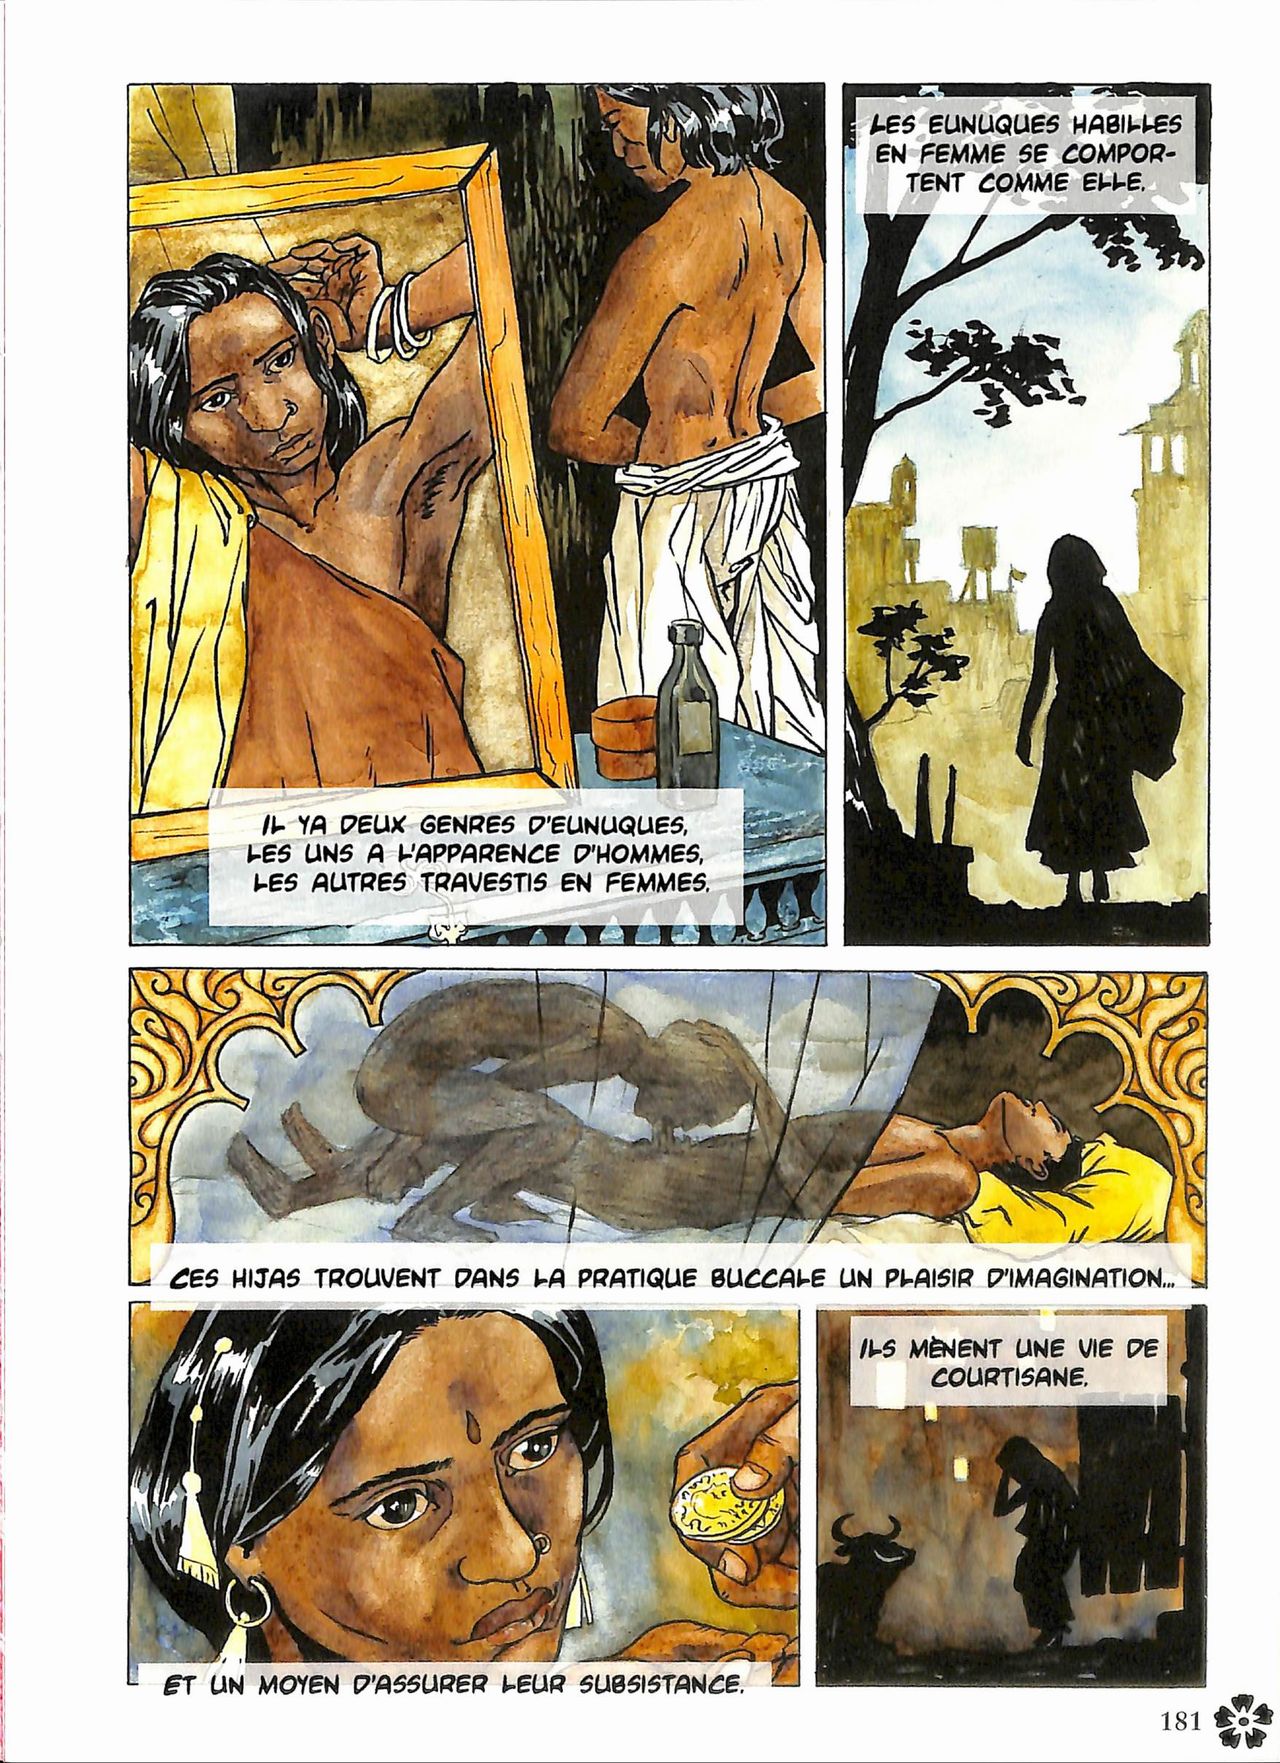 Kama Sutra en bandes dessinées - Kama Sutra with Comics numero d'image 181